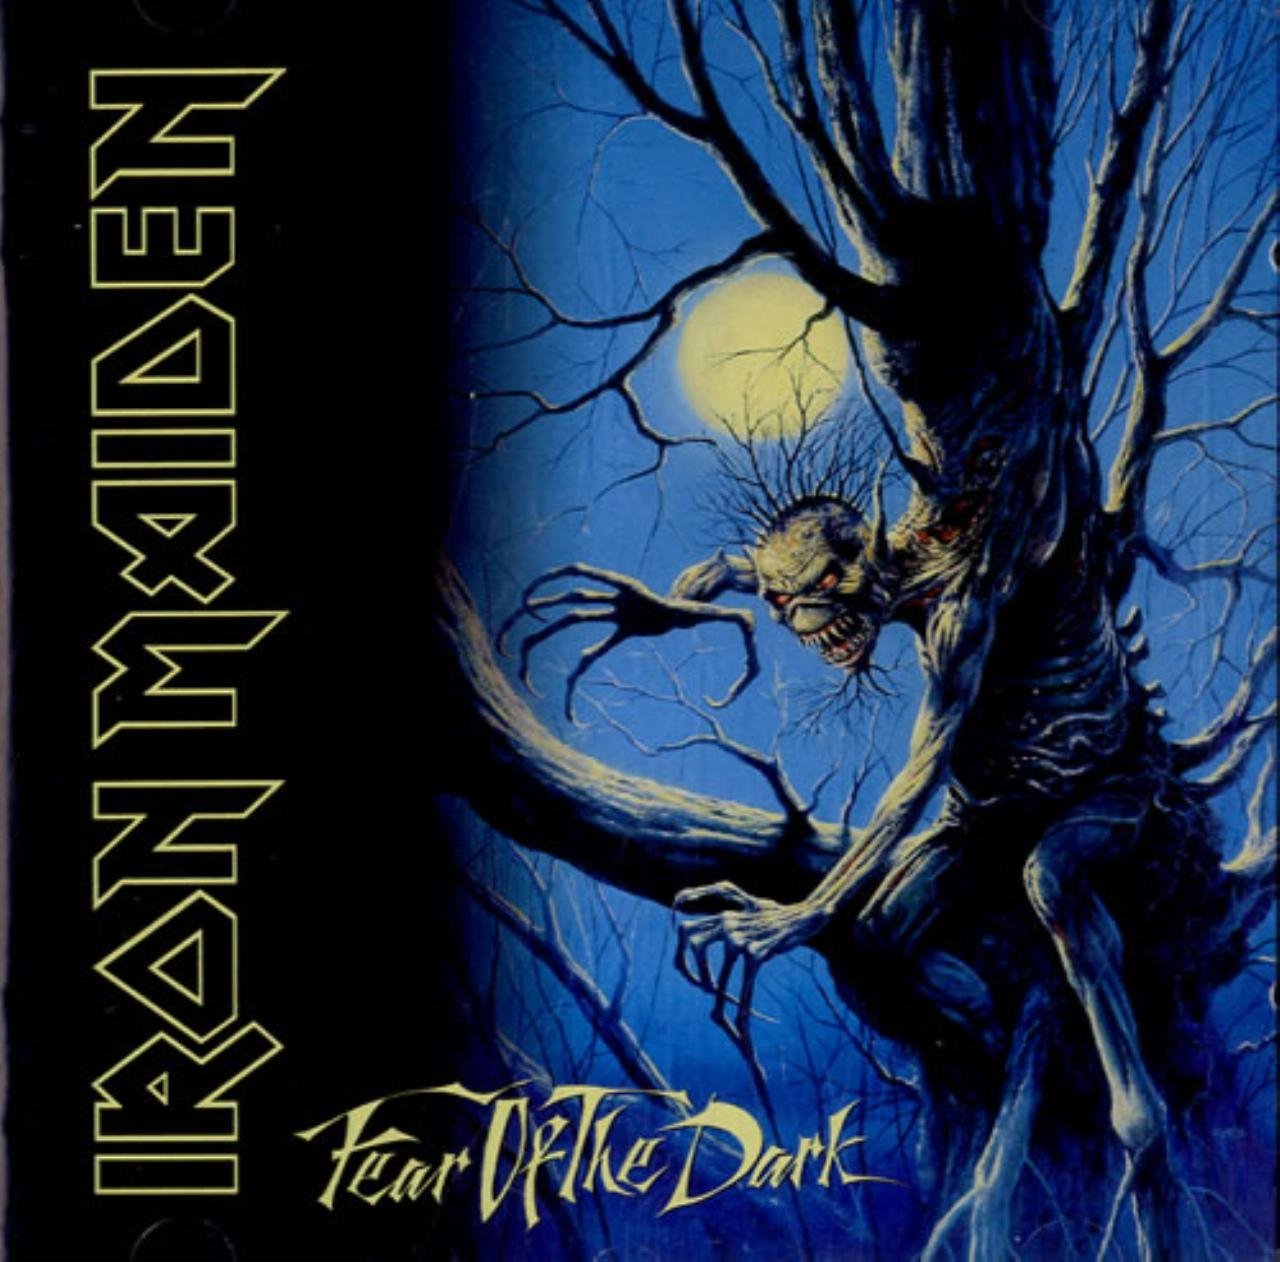 Iron Maiden "Fear Of The Dark" Digipak CD